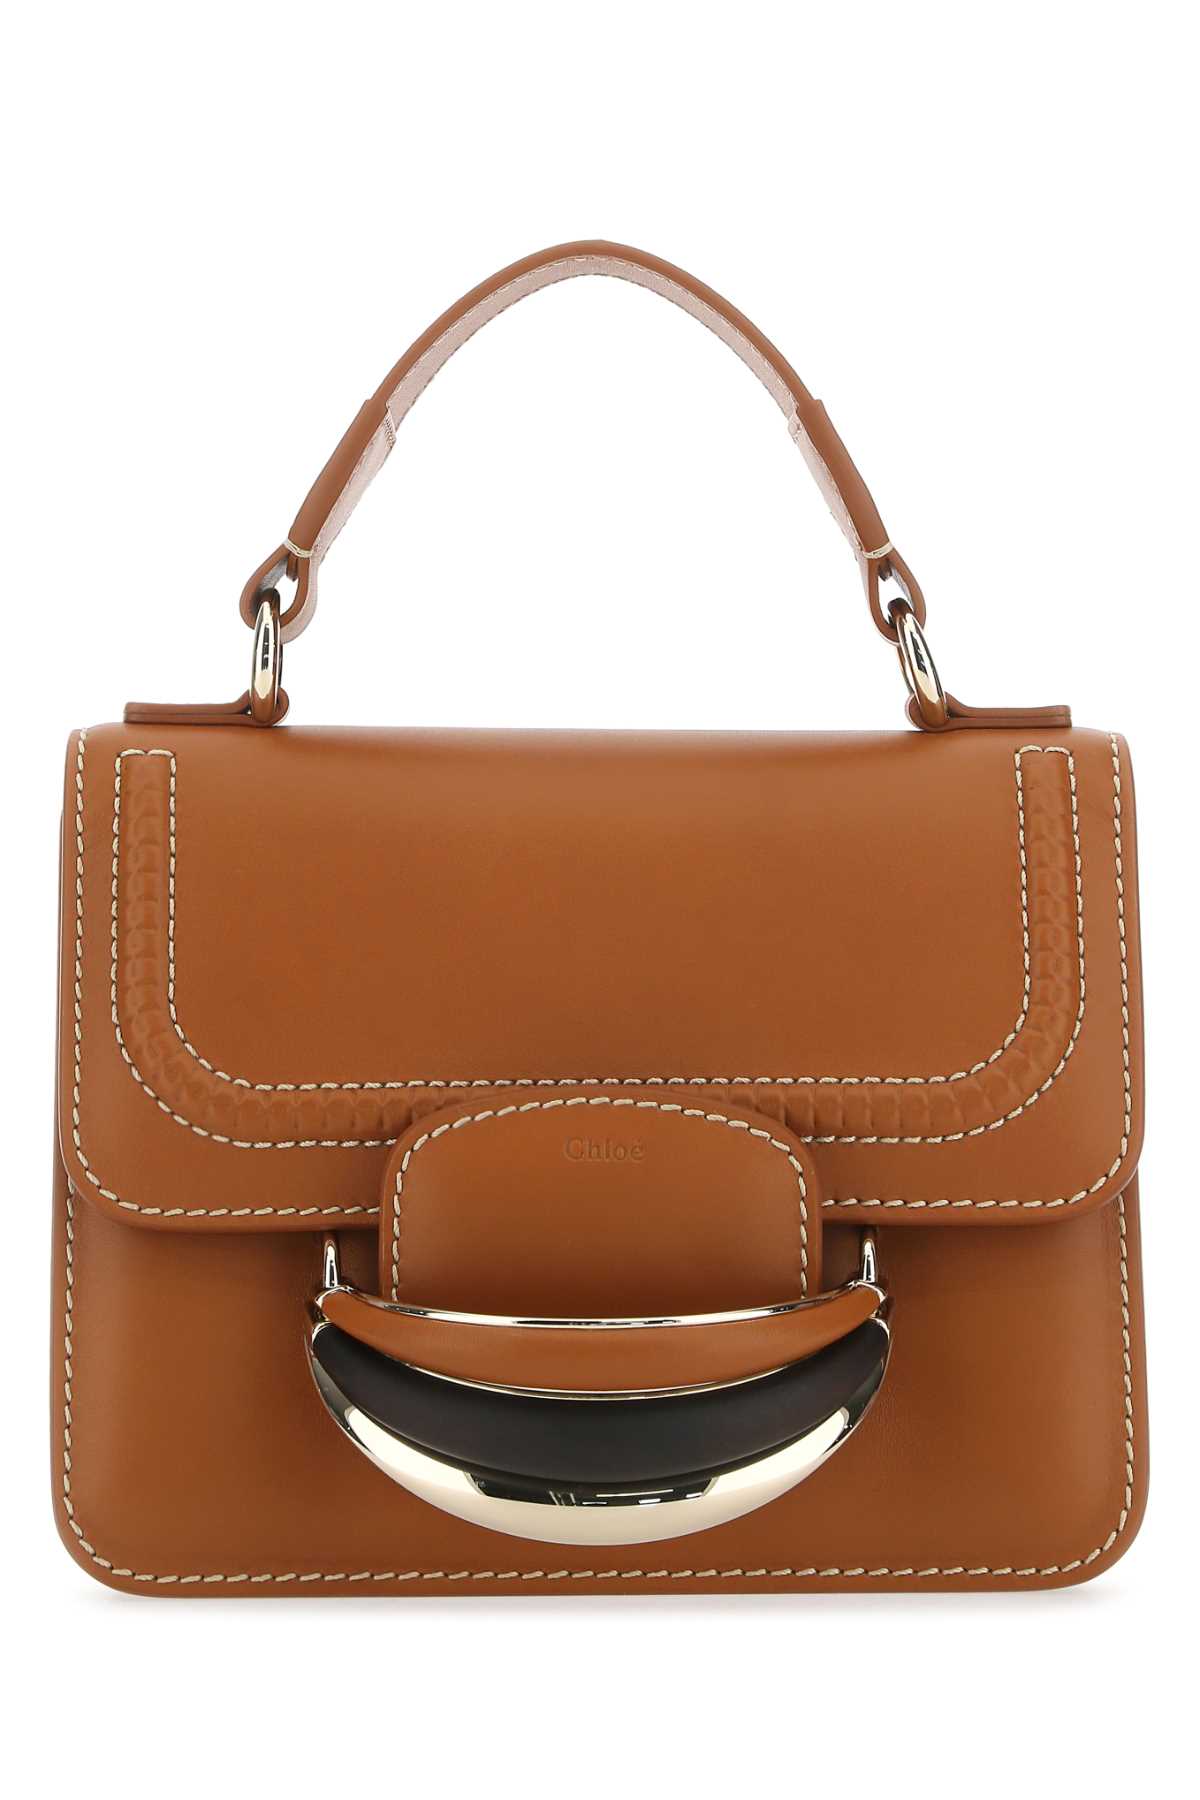 Chloé Caramel Leather Small Kattie Handbag